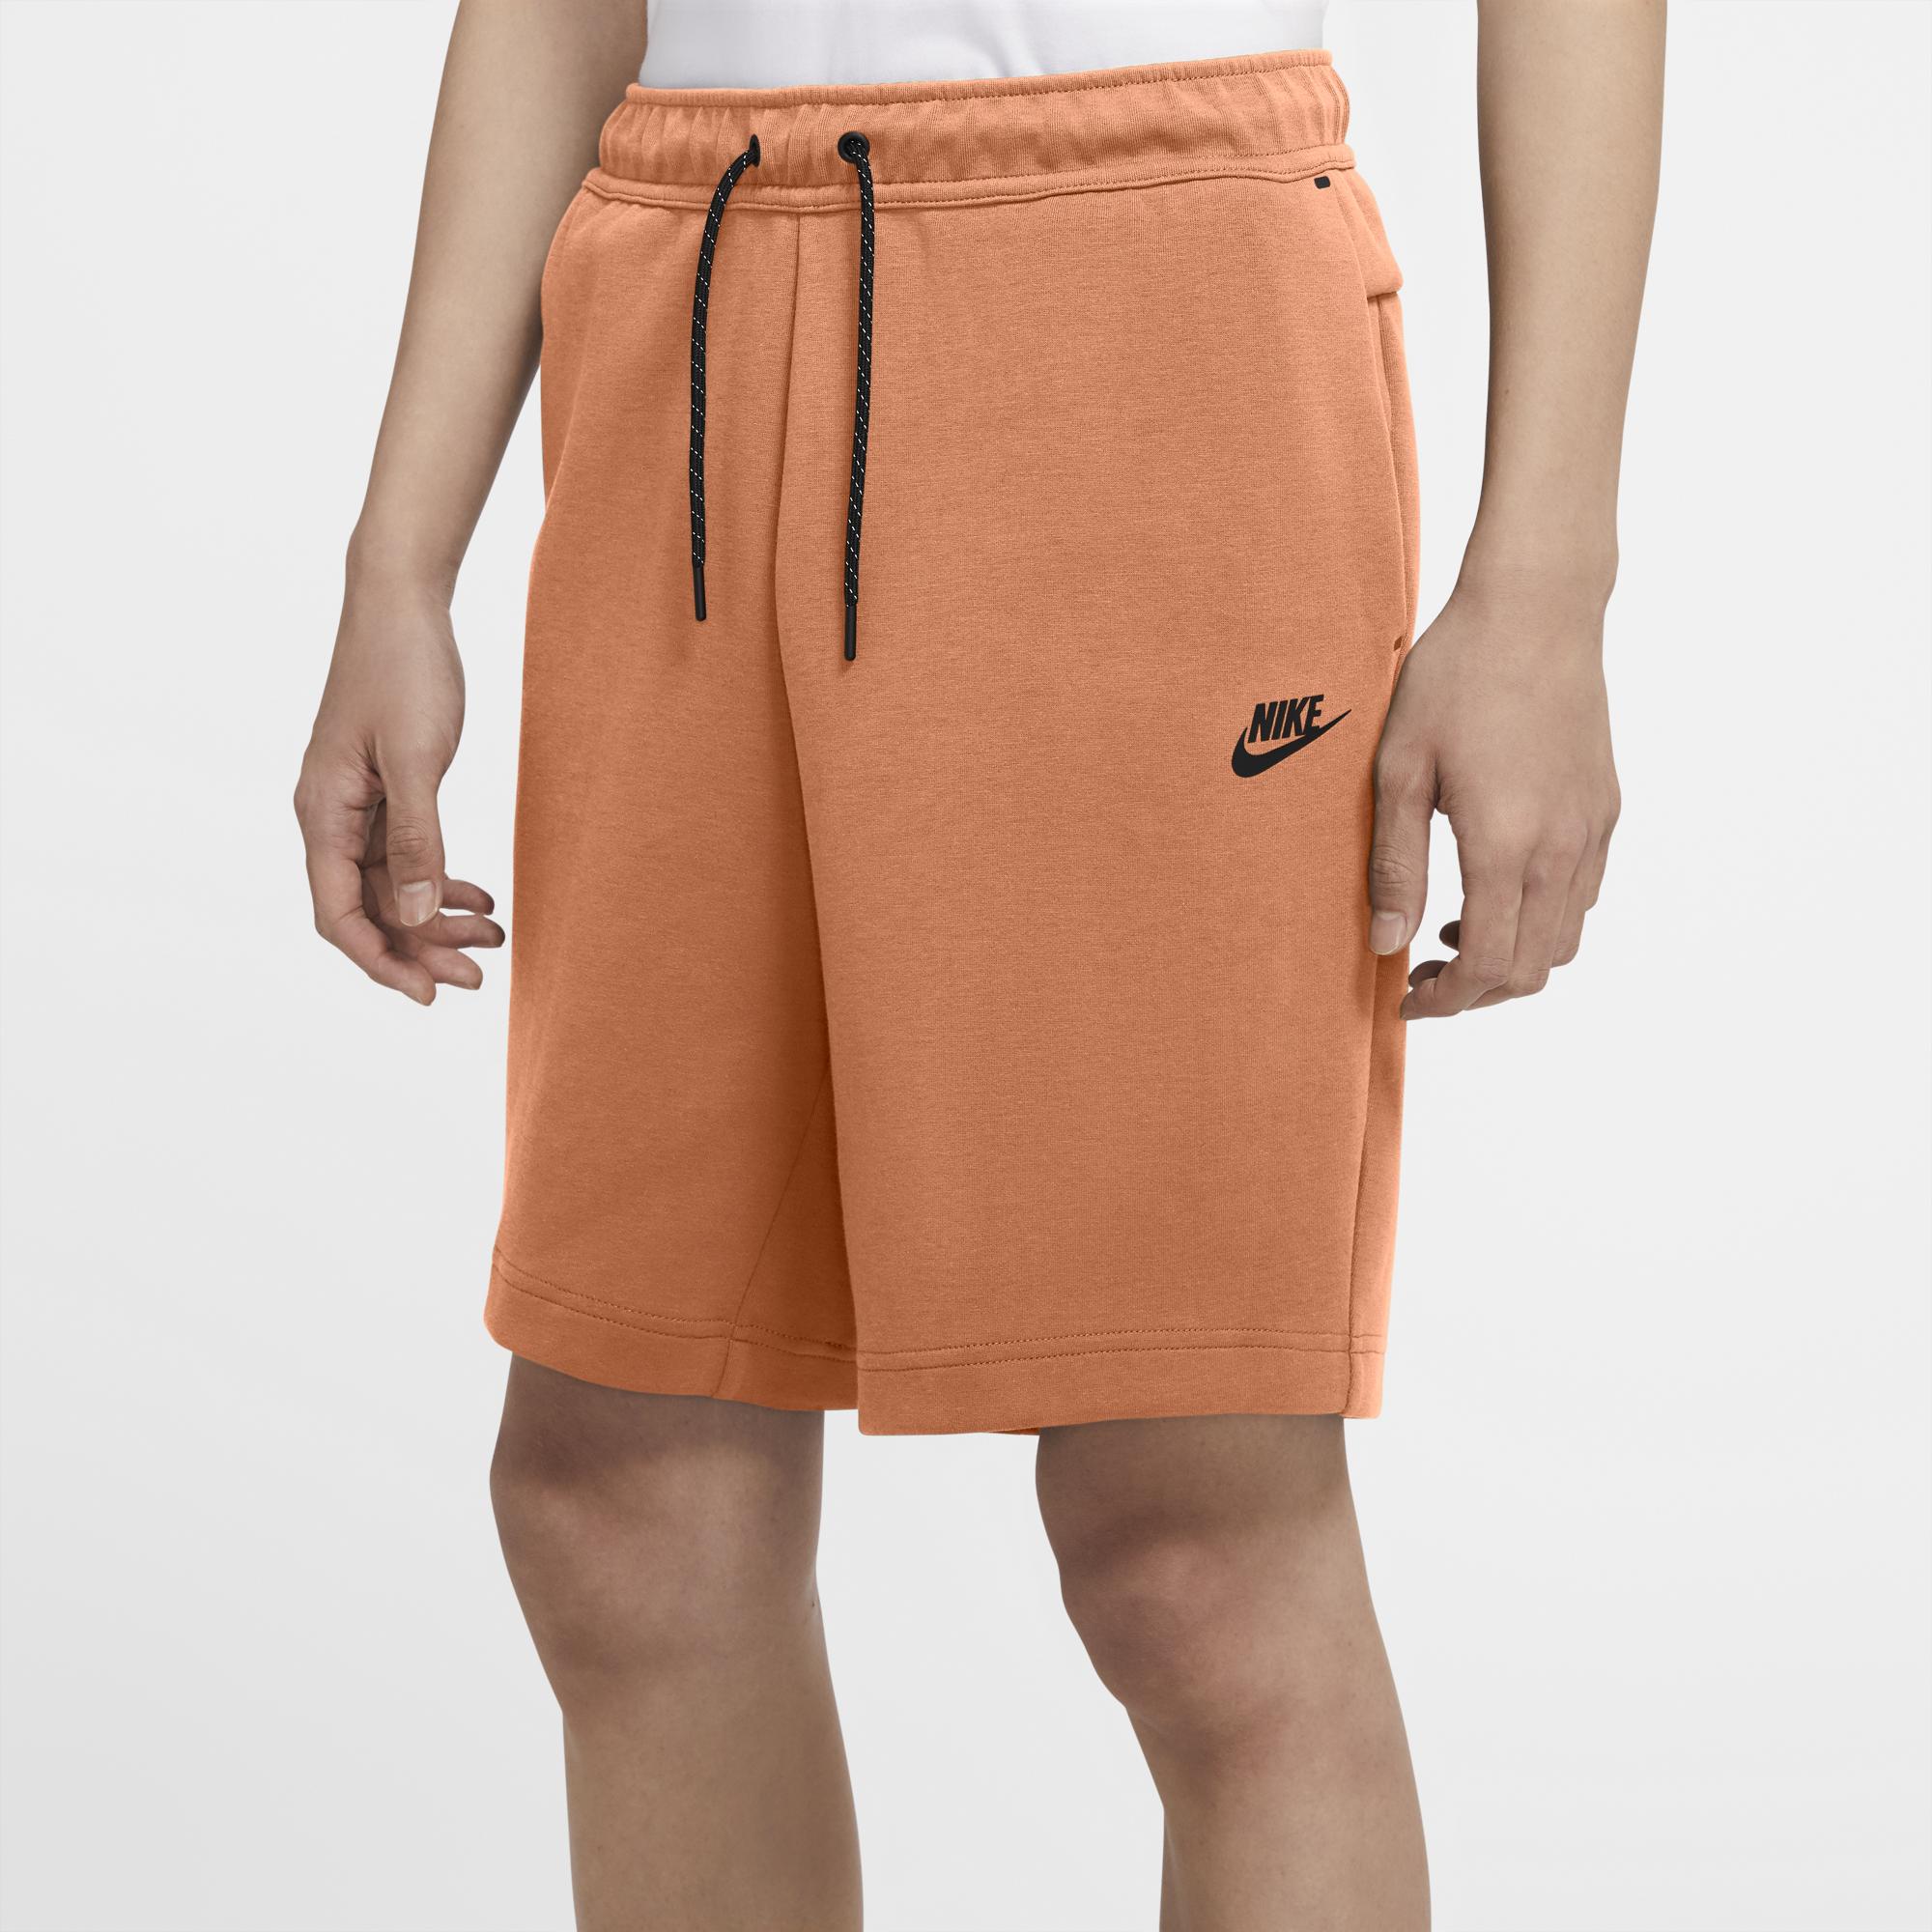 Nike Tech Fleece Shorts in Orange/Black (Orange) for Men - Save 23% - Lyst